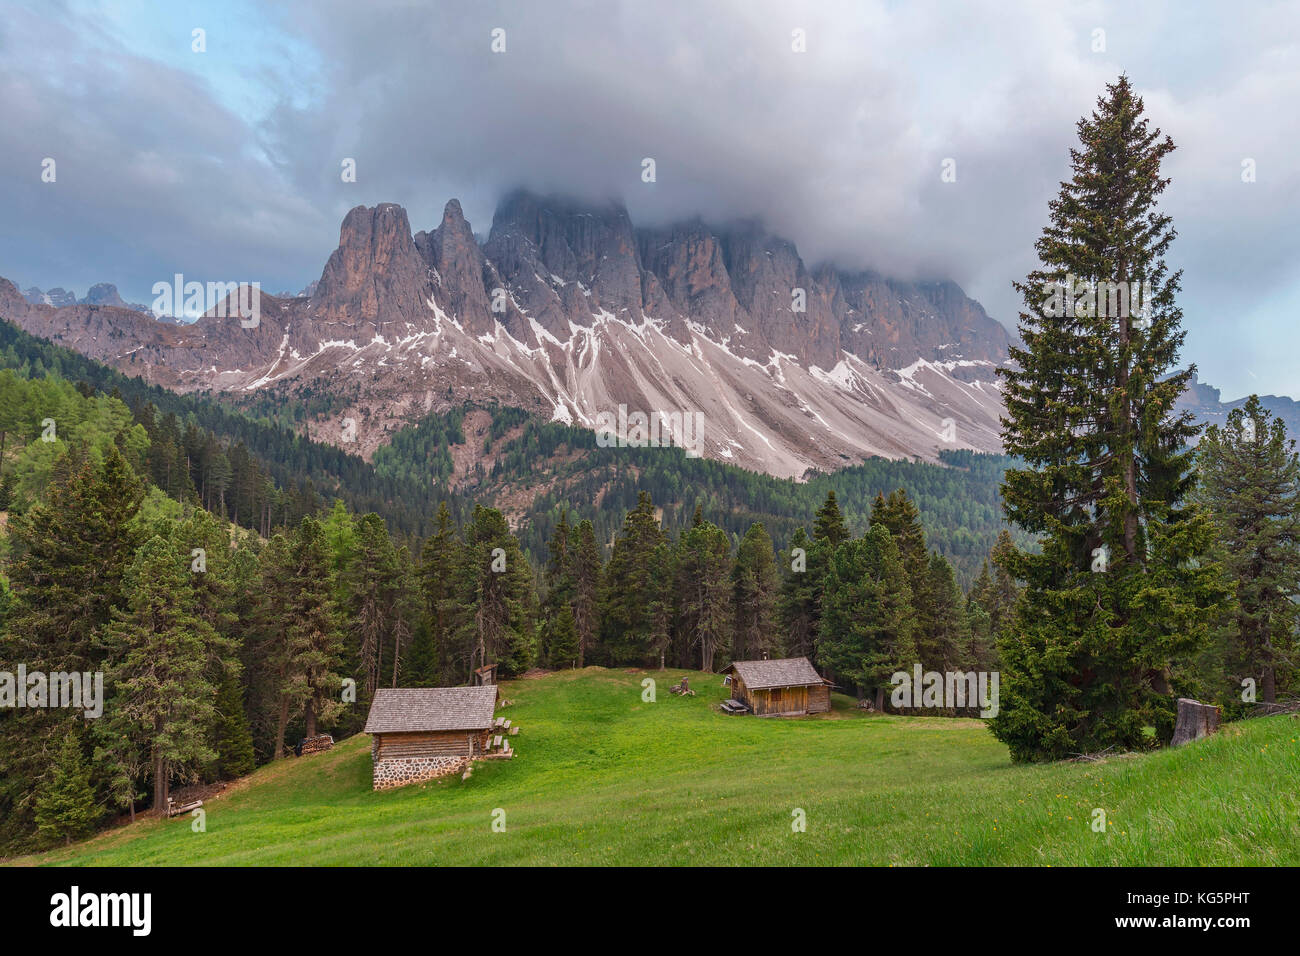 Gampenwiese, Gampen Alm, Val di Funes - Villnoesser Tal, Suedtirol - Alto Adige - South Tyrol, Italy, Europe Stock Photo